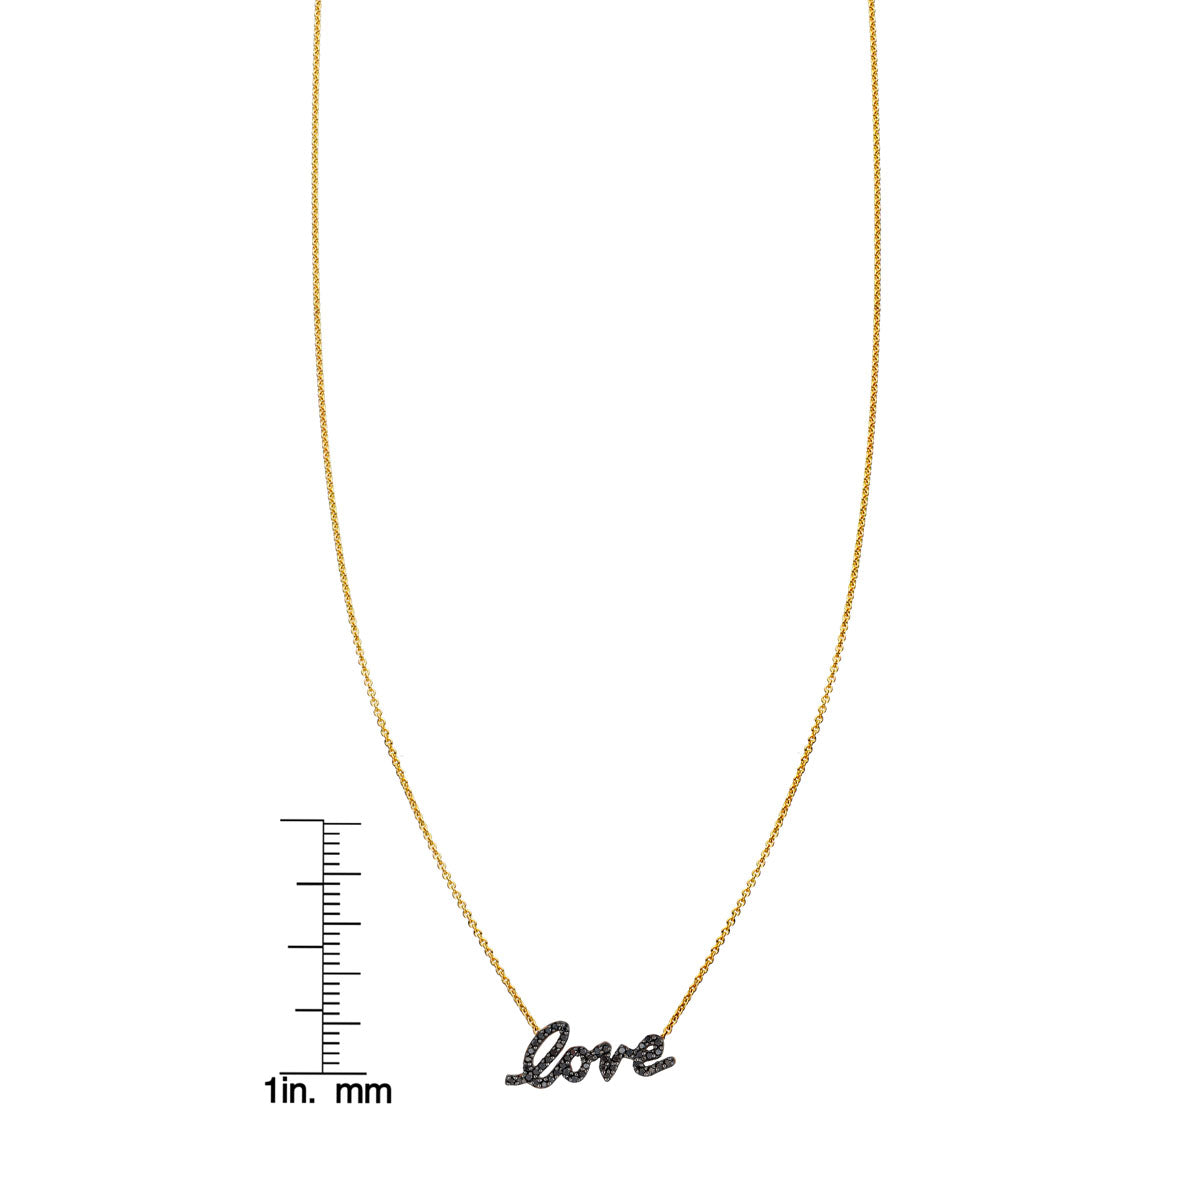 cursive love necklace scale measurement